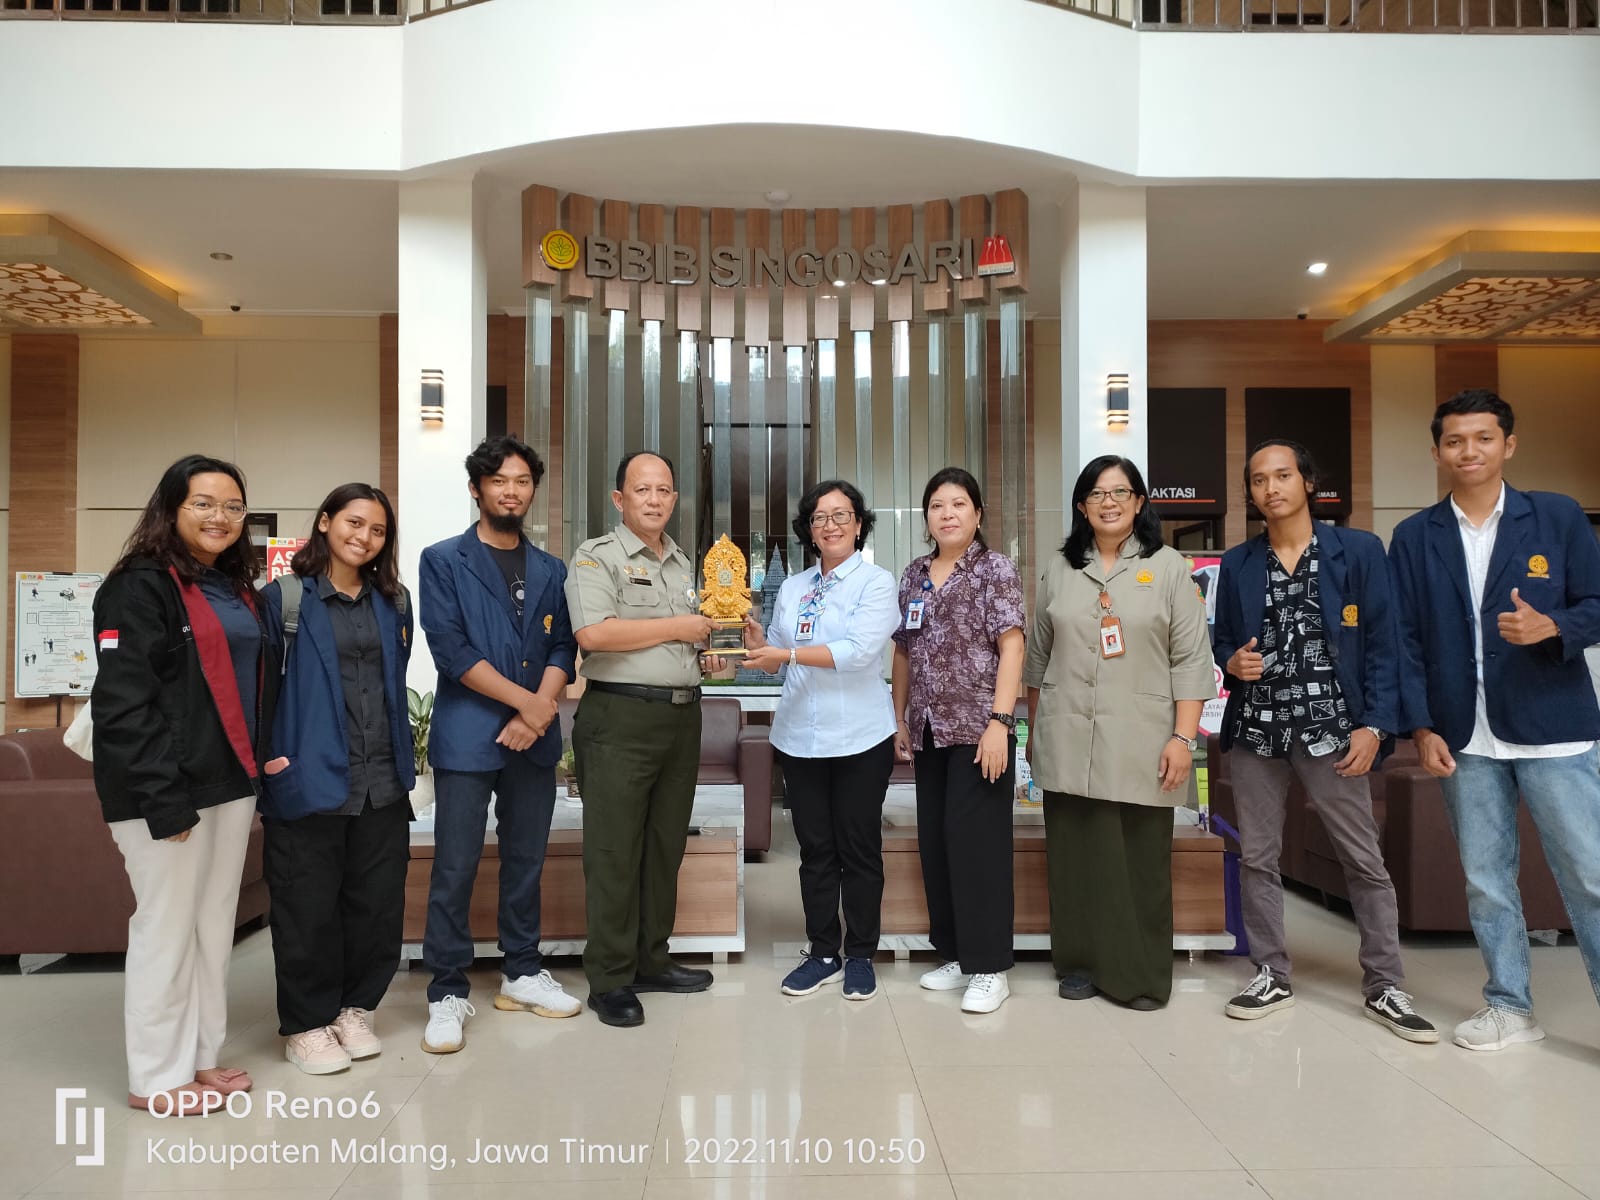 Faculty of Animal Husbandry Unud Signs the Minutes of PKS and Student Monitoring and Evaluation of PKKM Internships at BBIB Singosari Malang